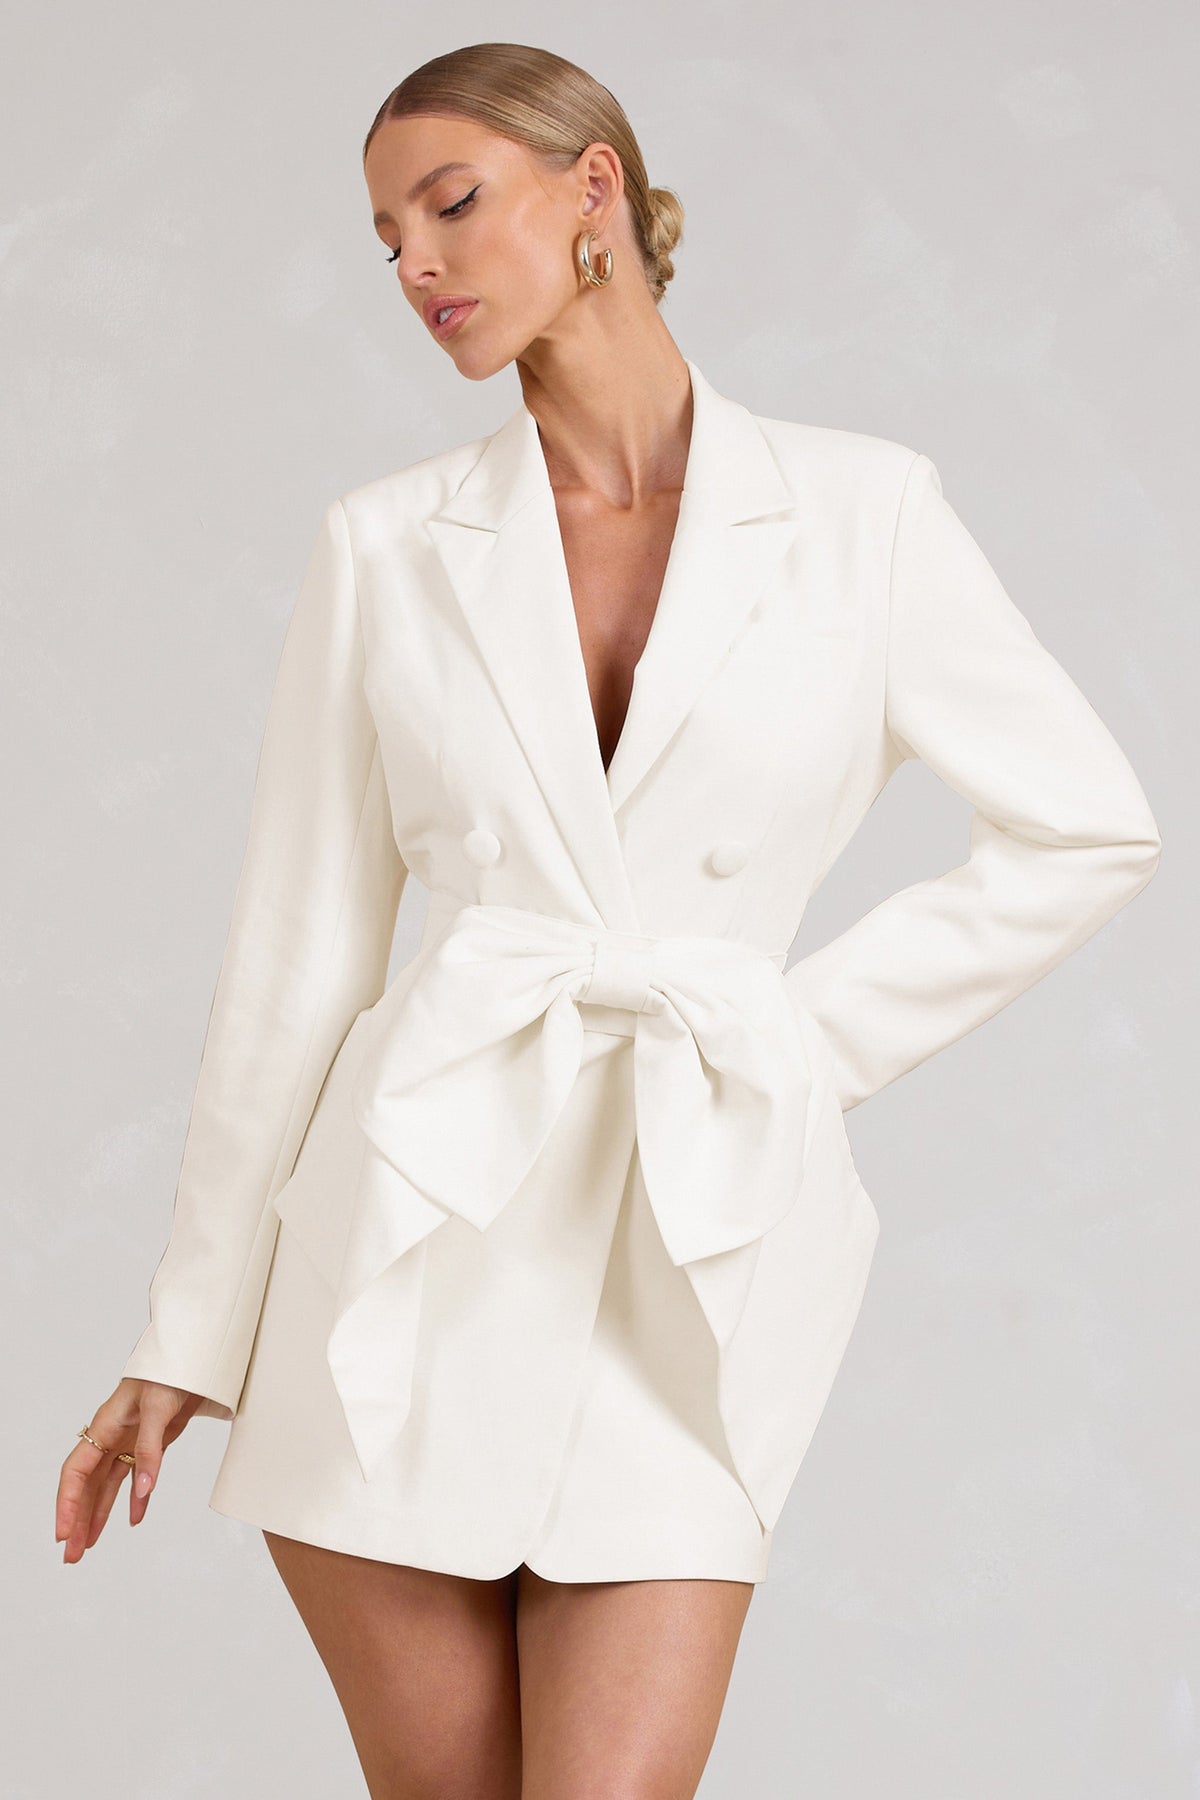 Prized White Tailored Blazer Mini Dress With Bow – Club L London - USA